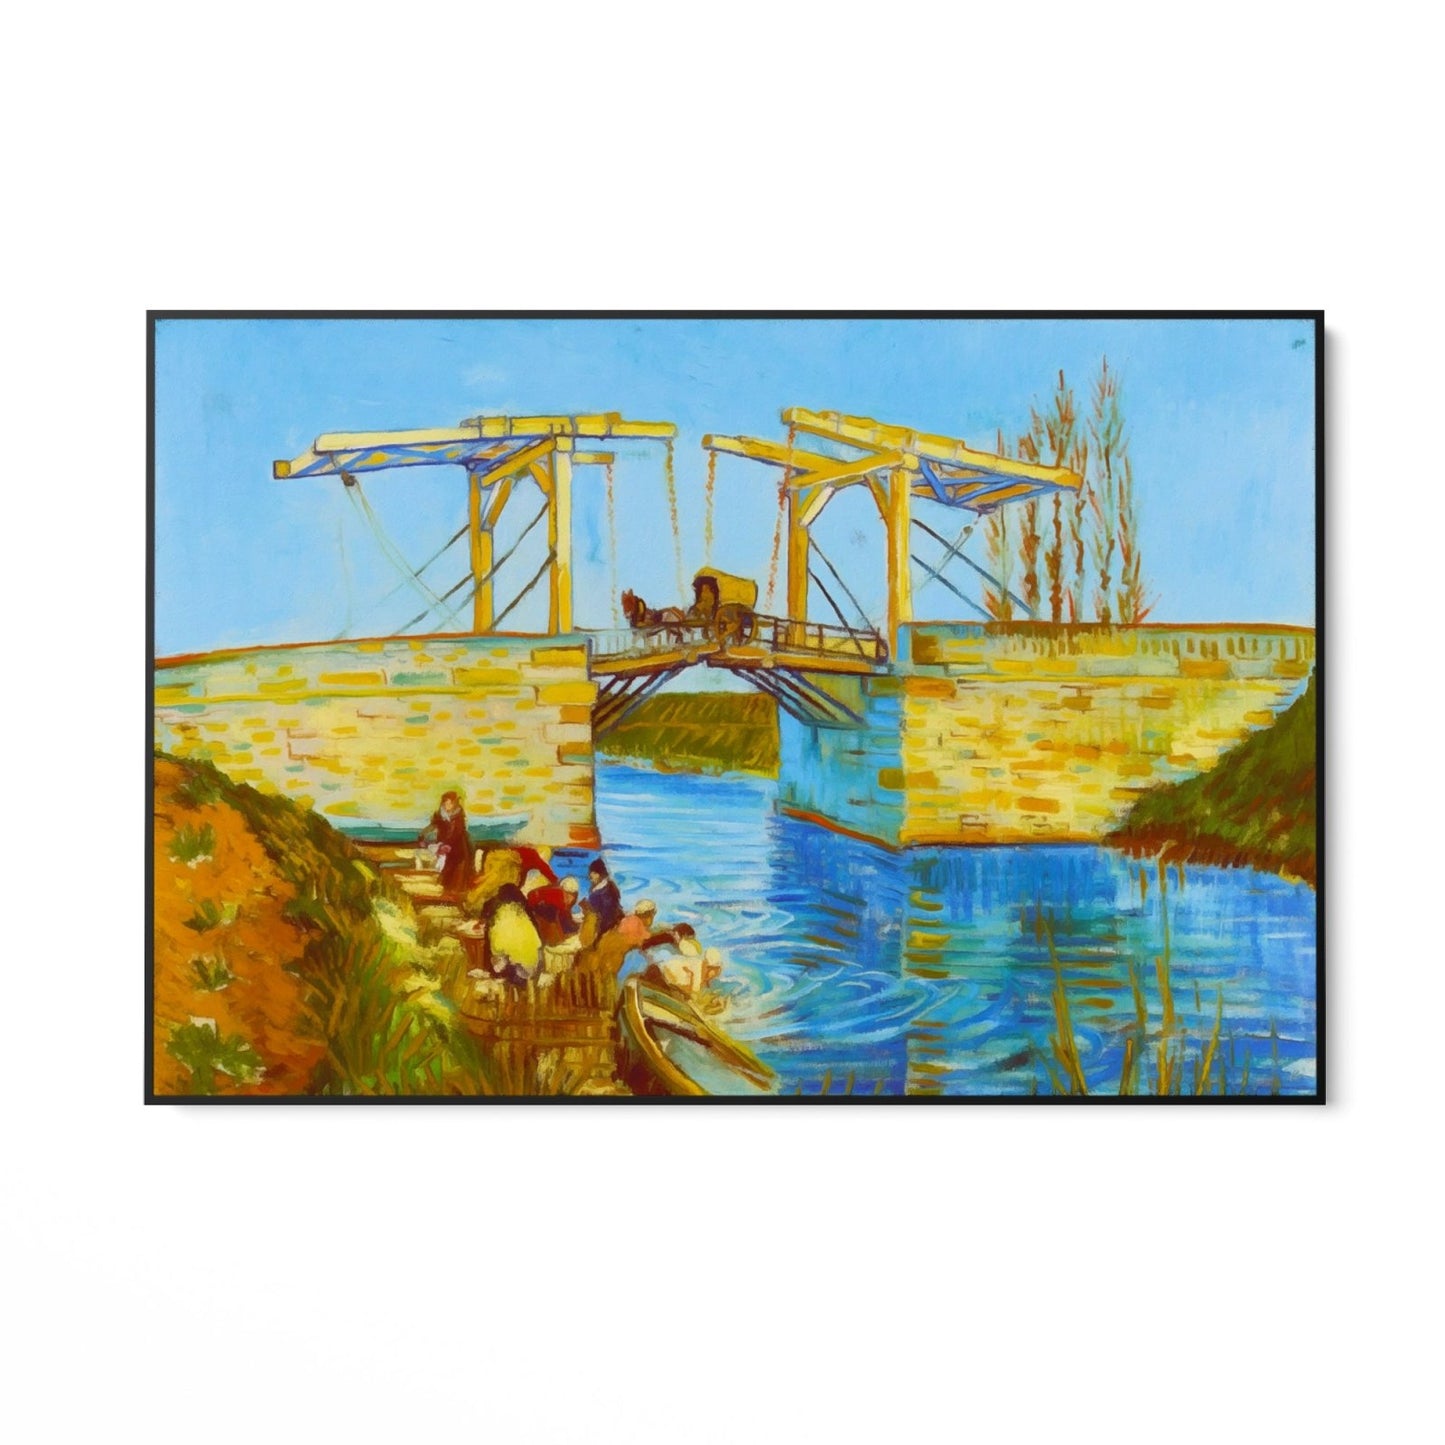 Mosty v Arles, Vincent Van Gogh